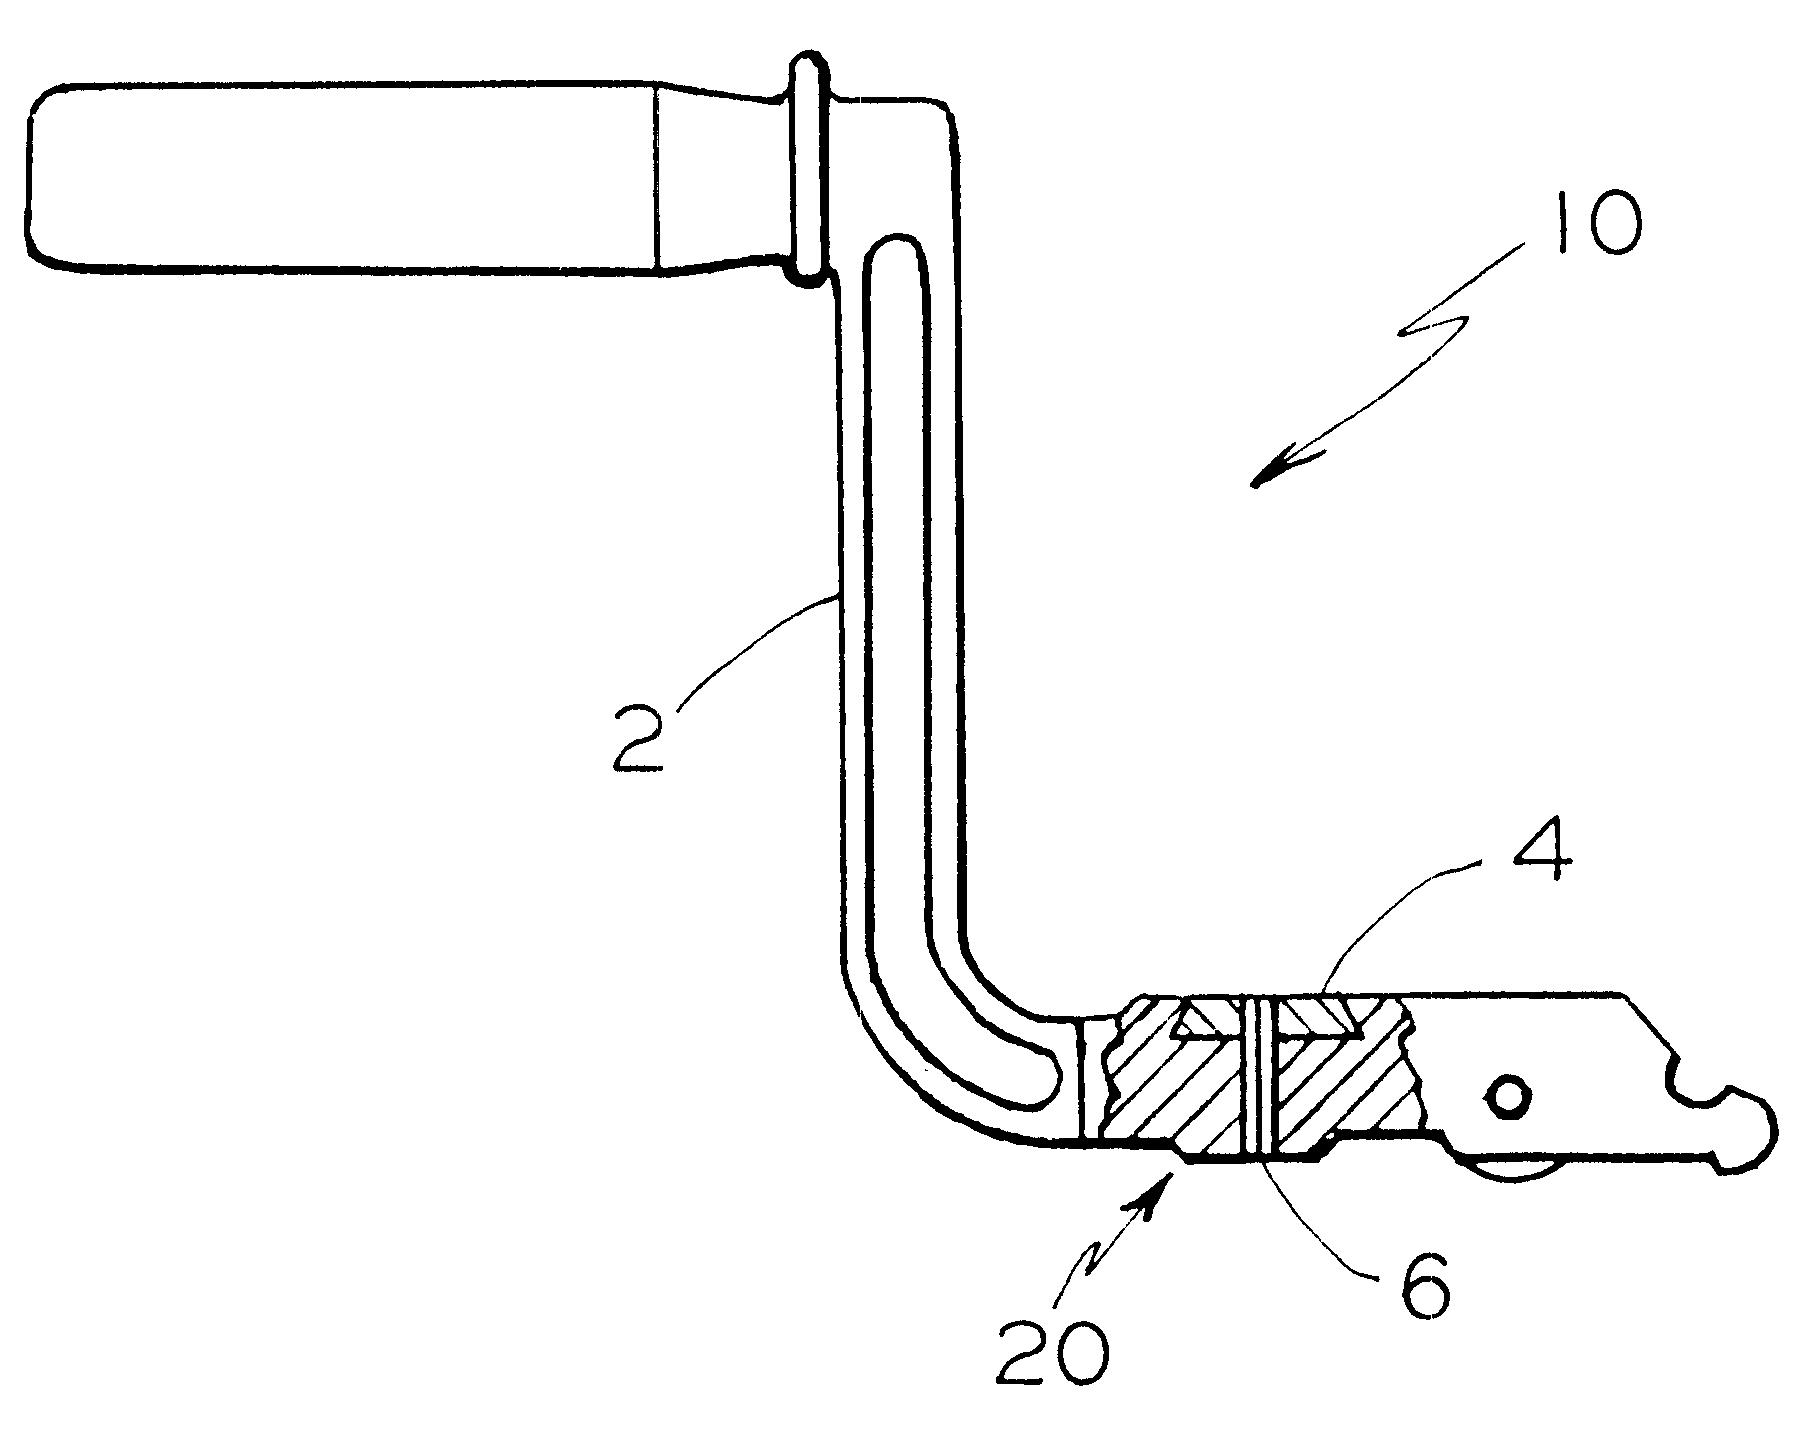 Locomotive brake valve handle with wear pad